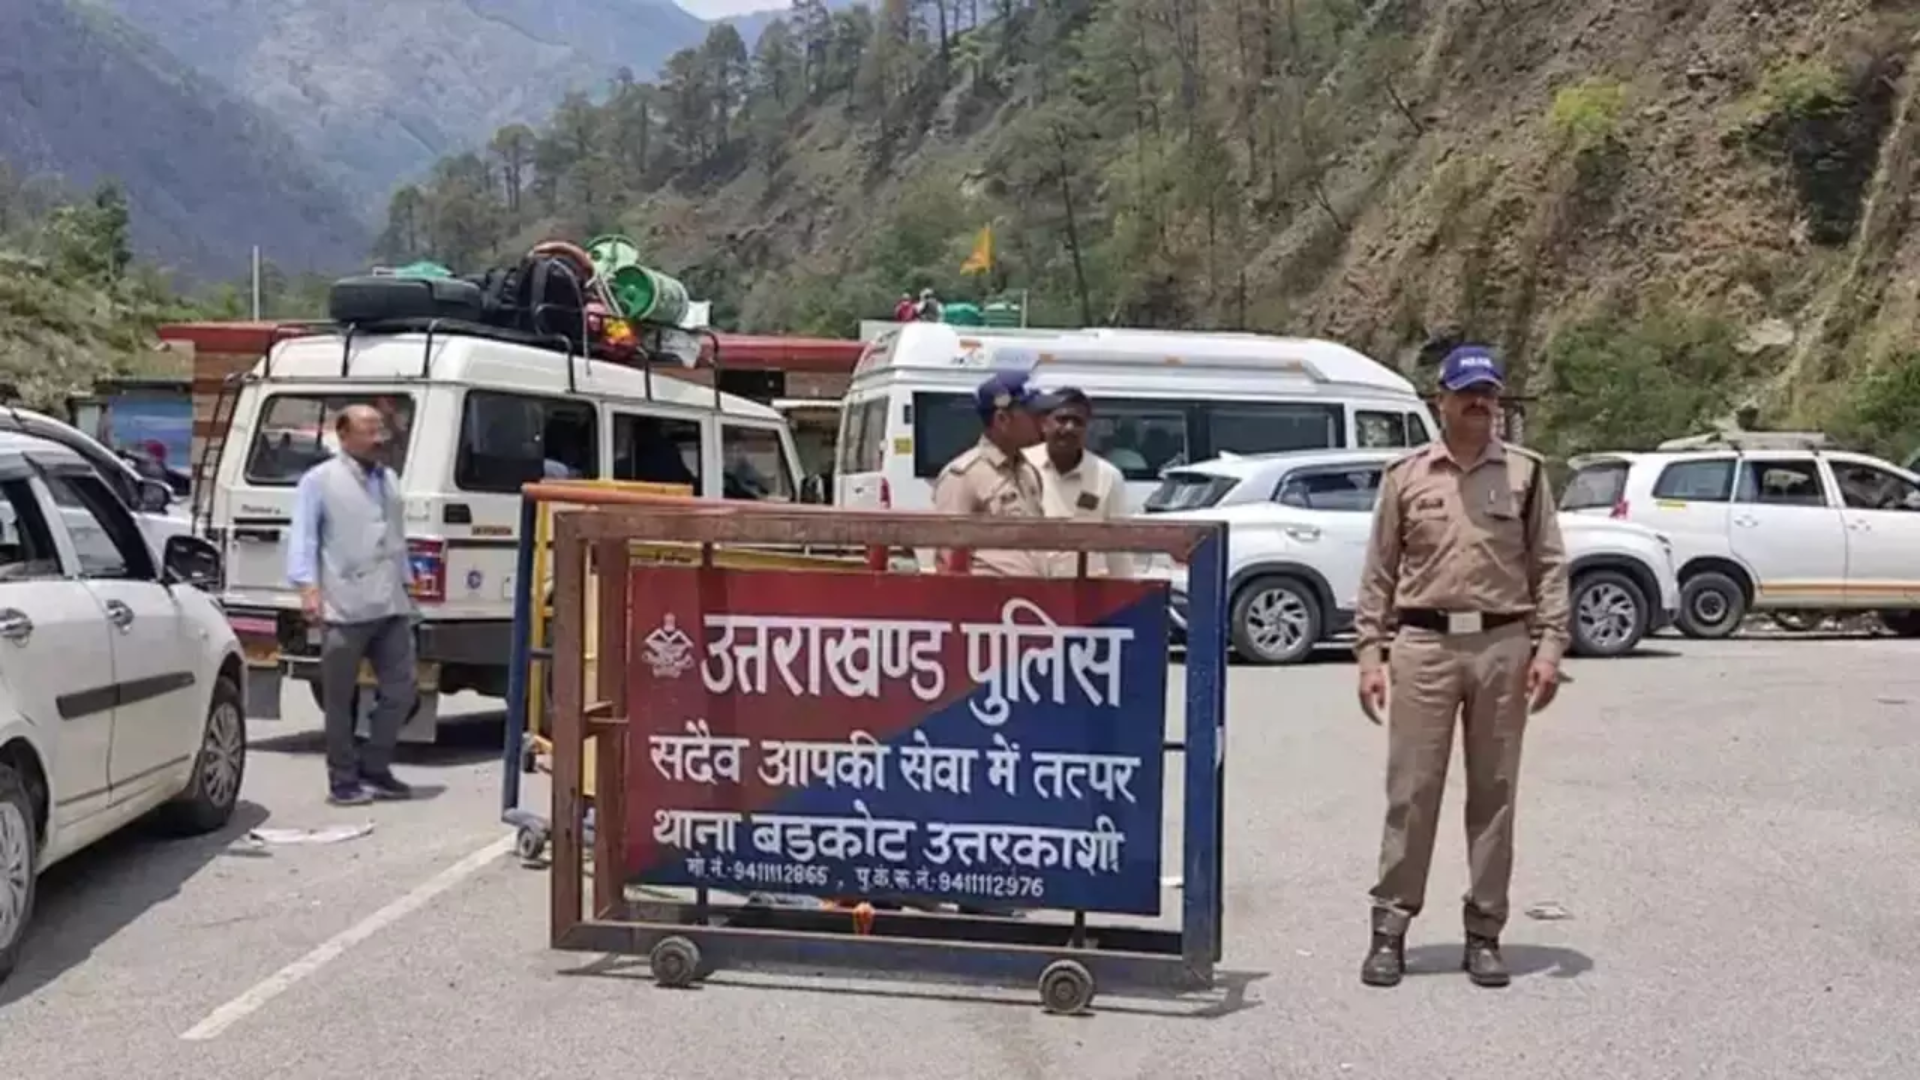 Uttarkashi Police Urges Devotees to Postpone Yamunotri Yatra Amid Crowded Conditions